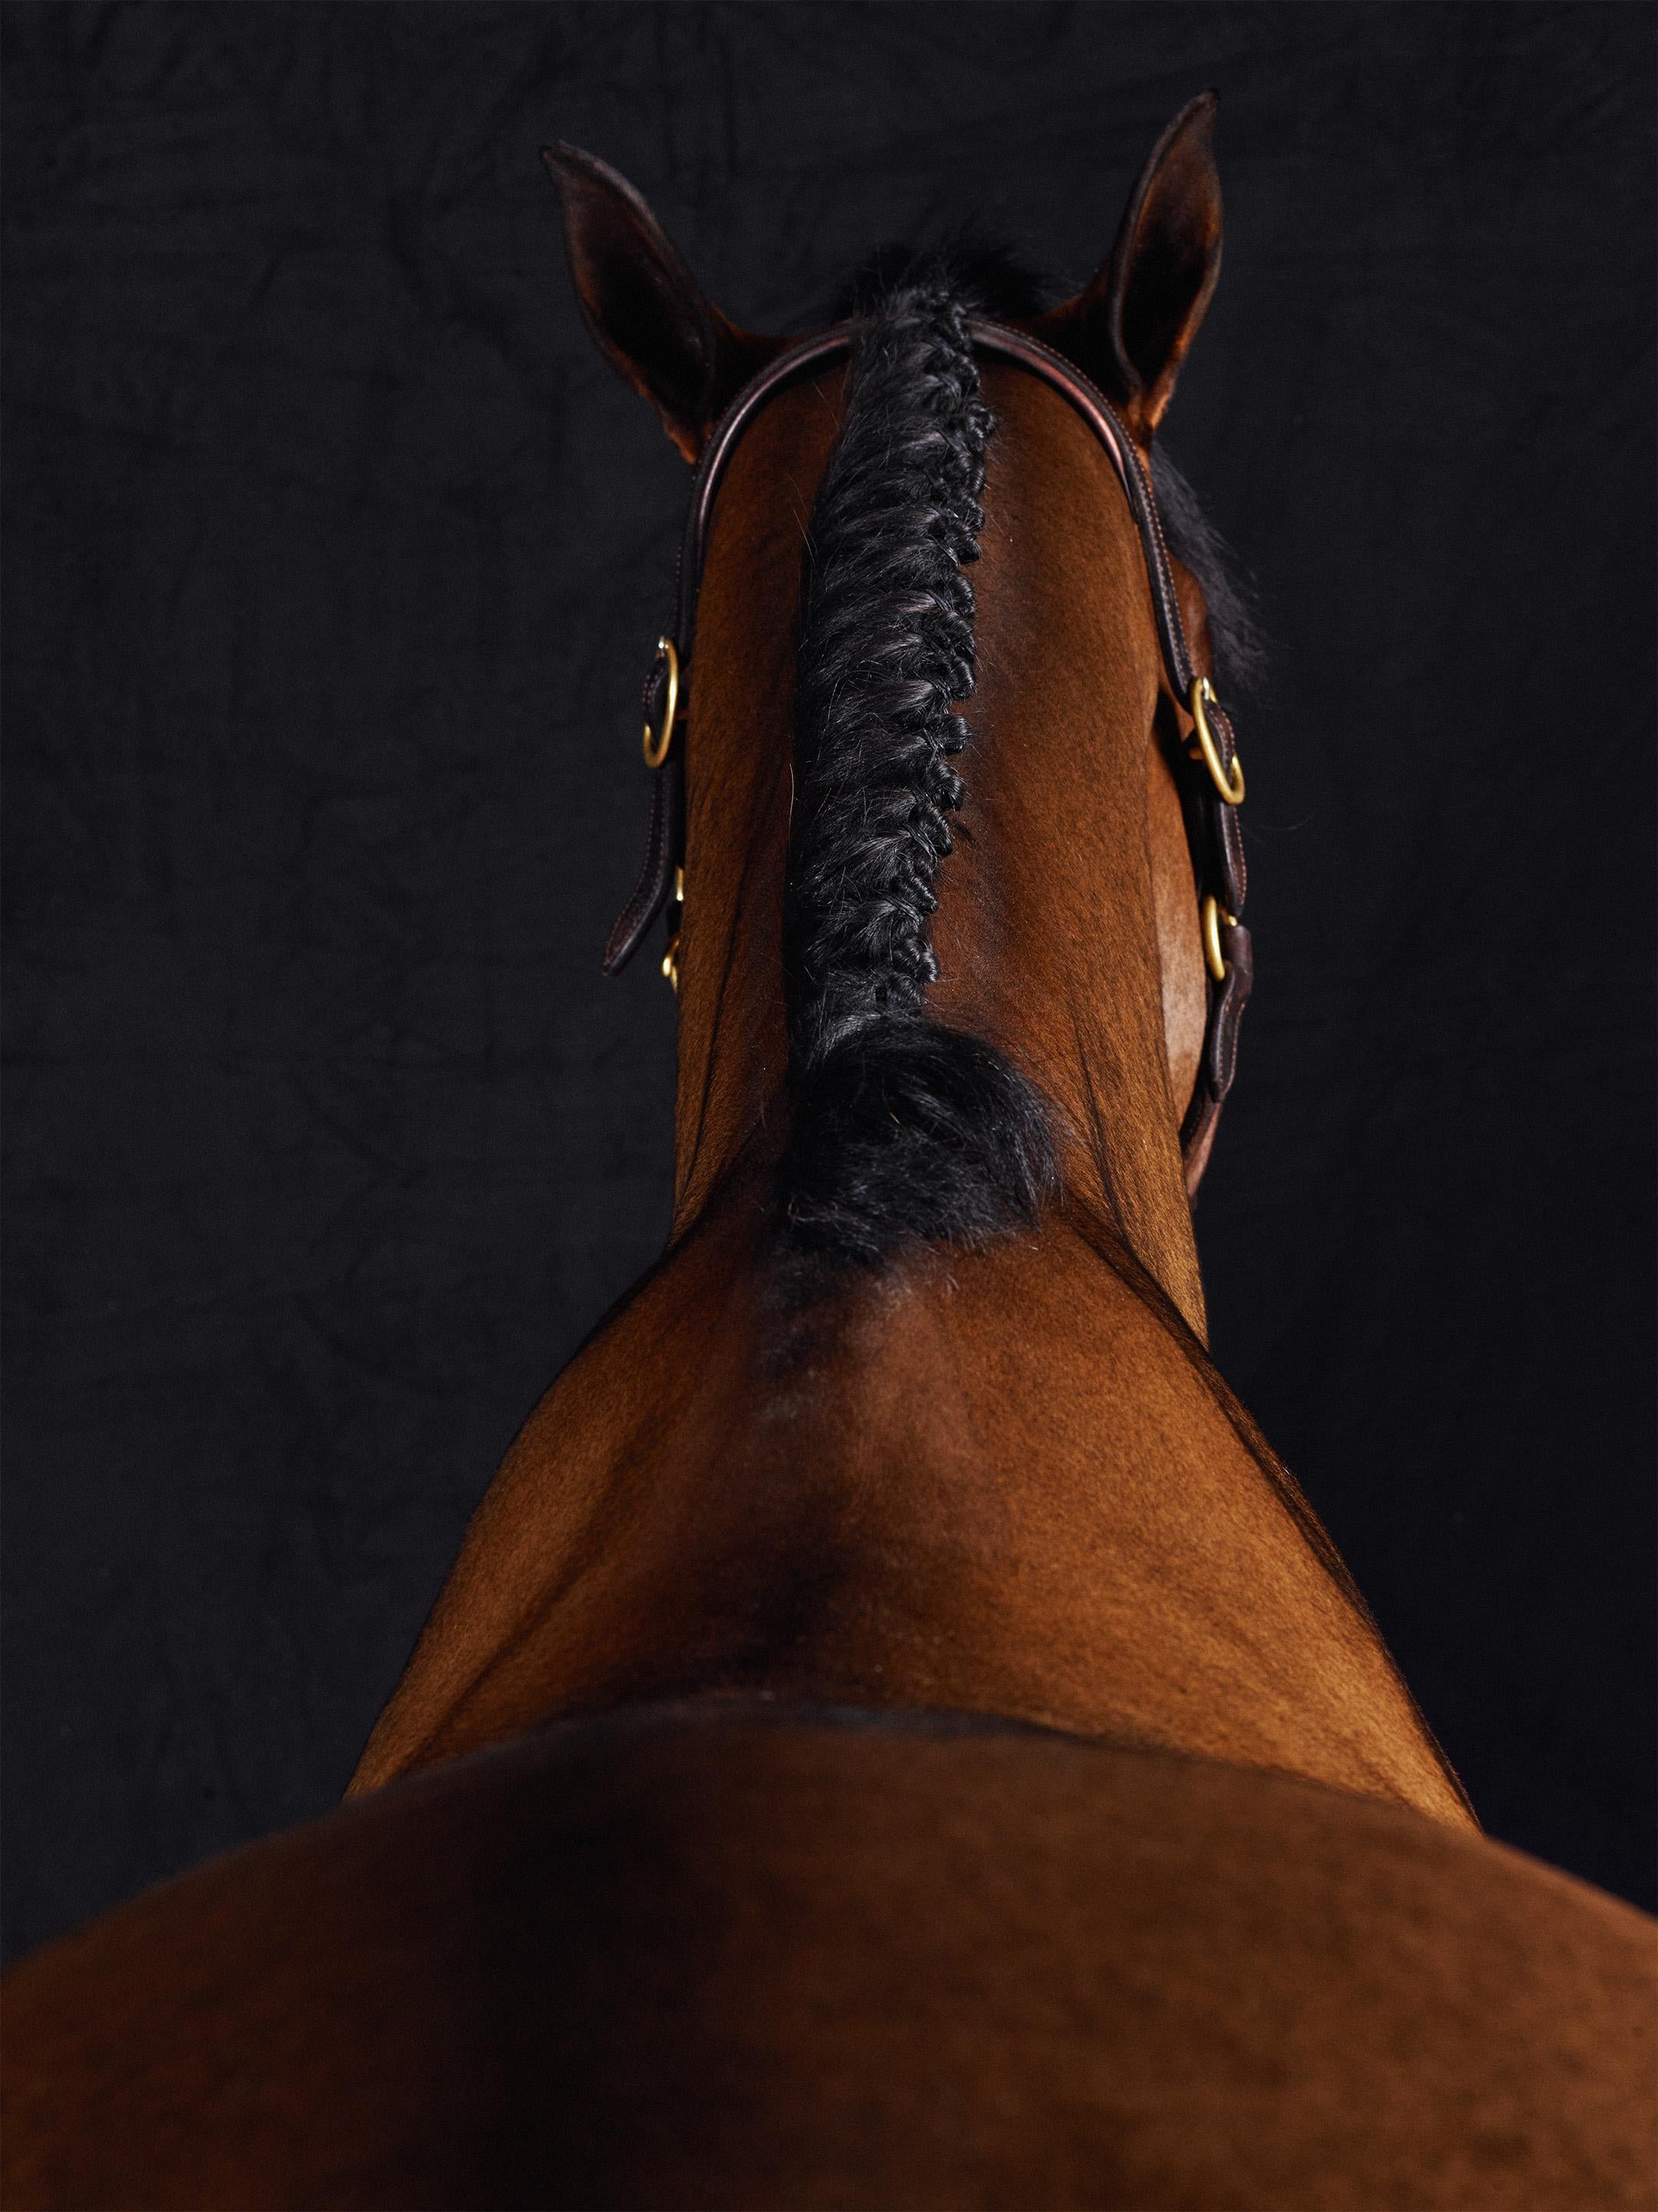 Juan Lamarca Abstract Photograph - Lamerick II - Full Color Limited Edition Horse Portrait 2015